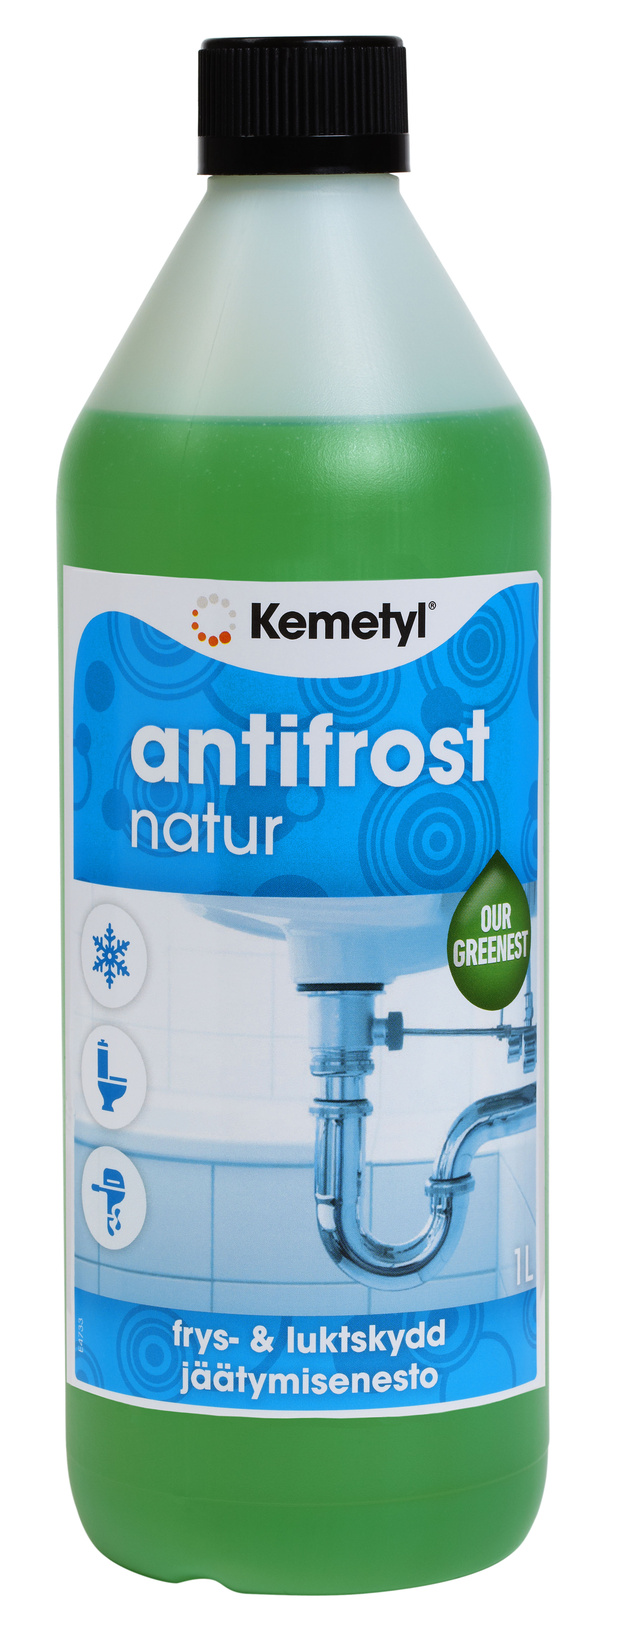 Frysskydd Antifrost natur 1 lit